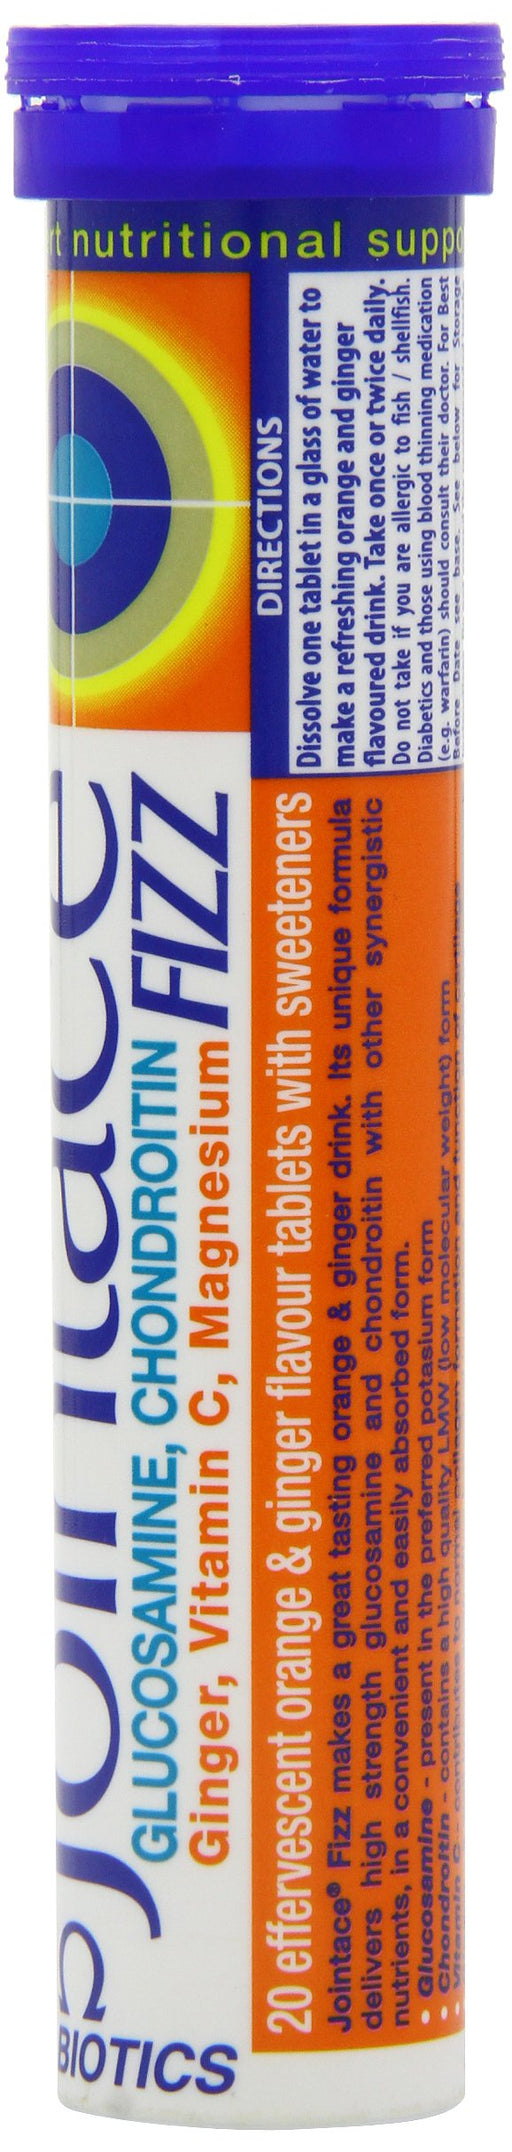 Vitabiotics Jointace Fizz Effervescent Tablets